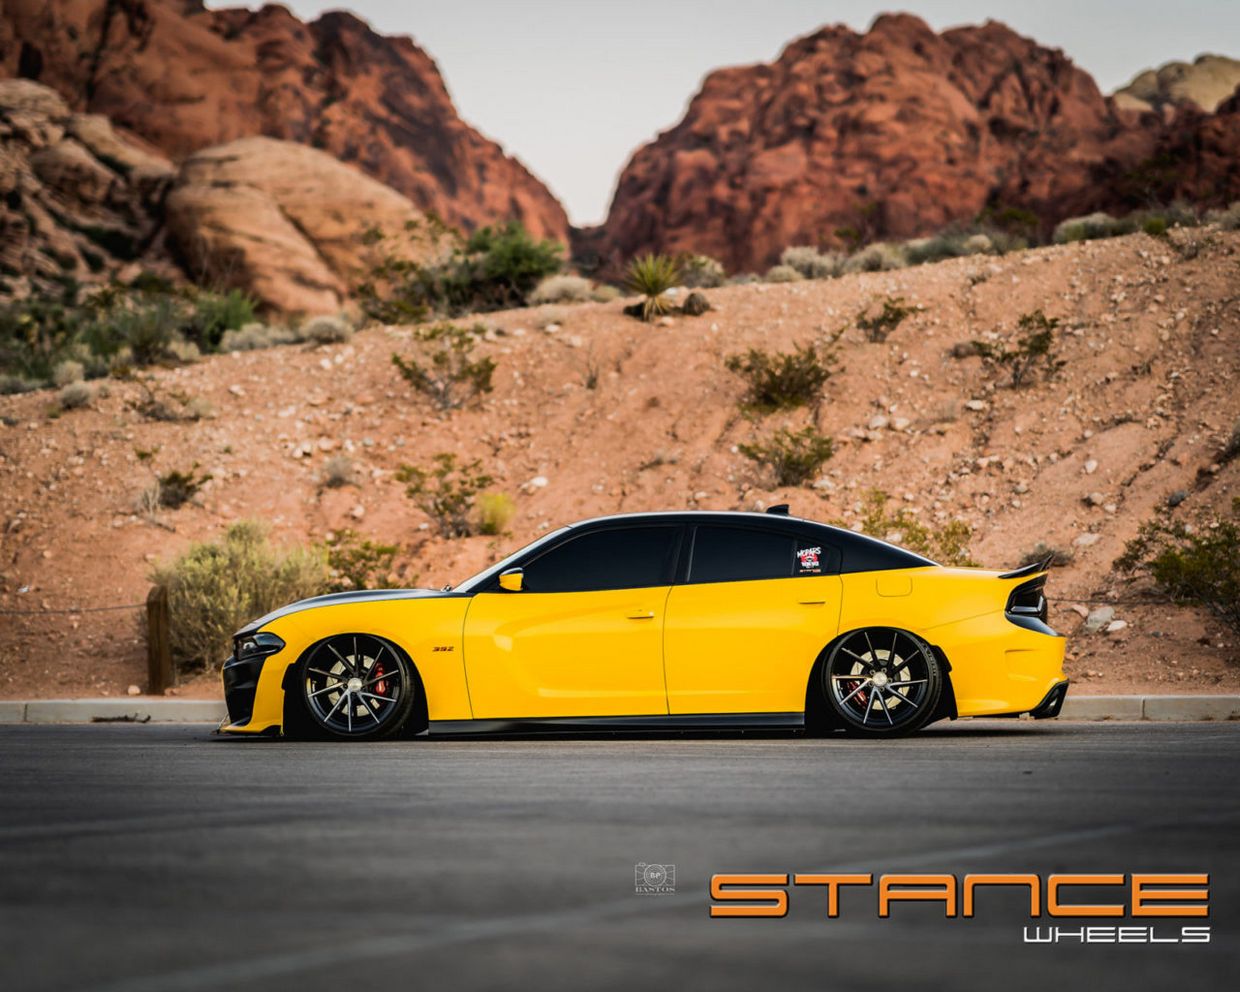 Stance SF01 on Dodge Changer Scat Pack